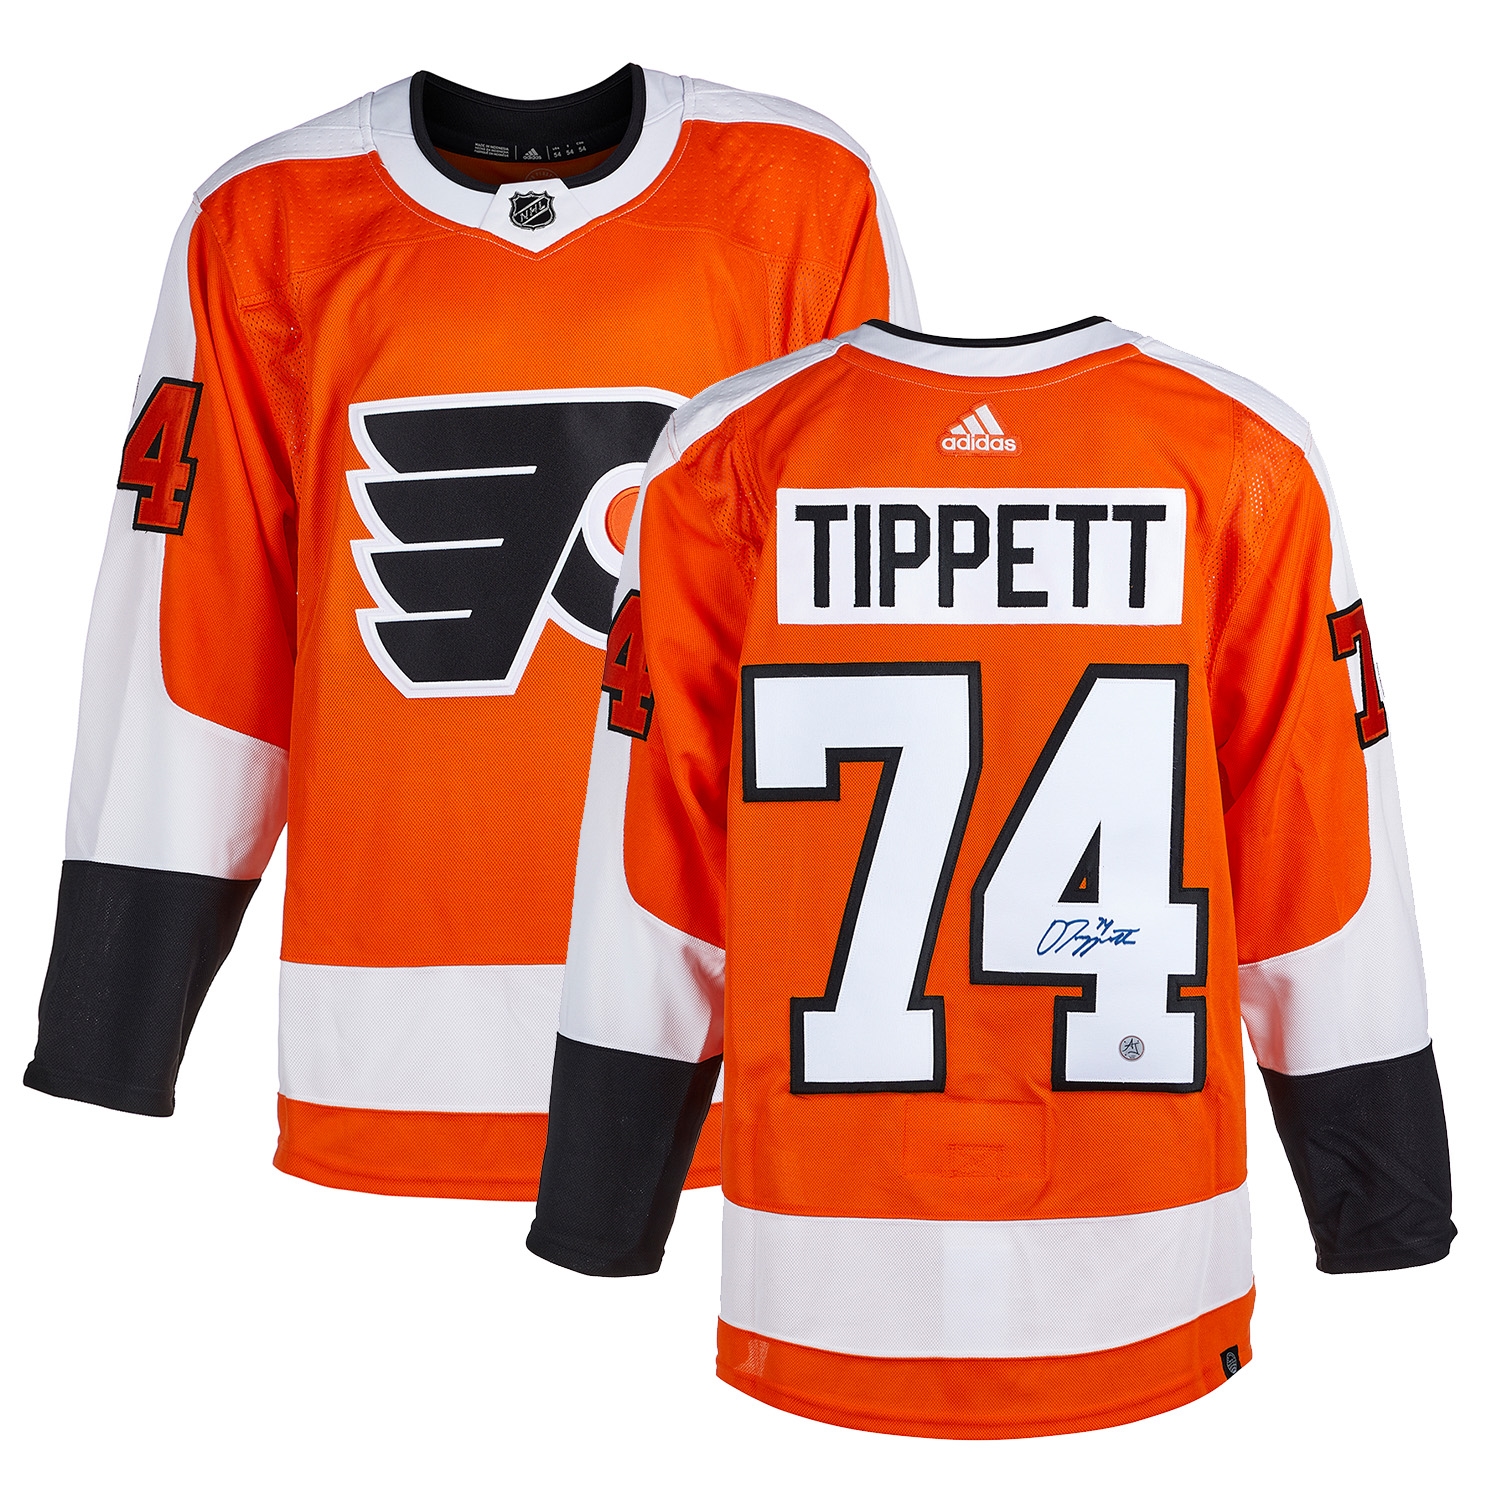 Owen Tippett Autographed Philadelphia Flyers adidas Jersey